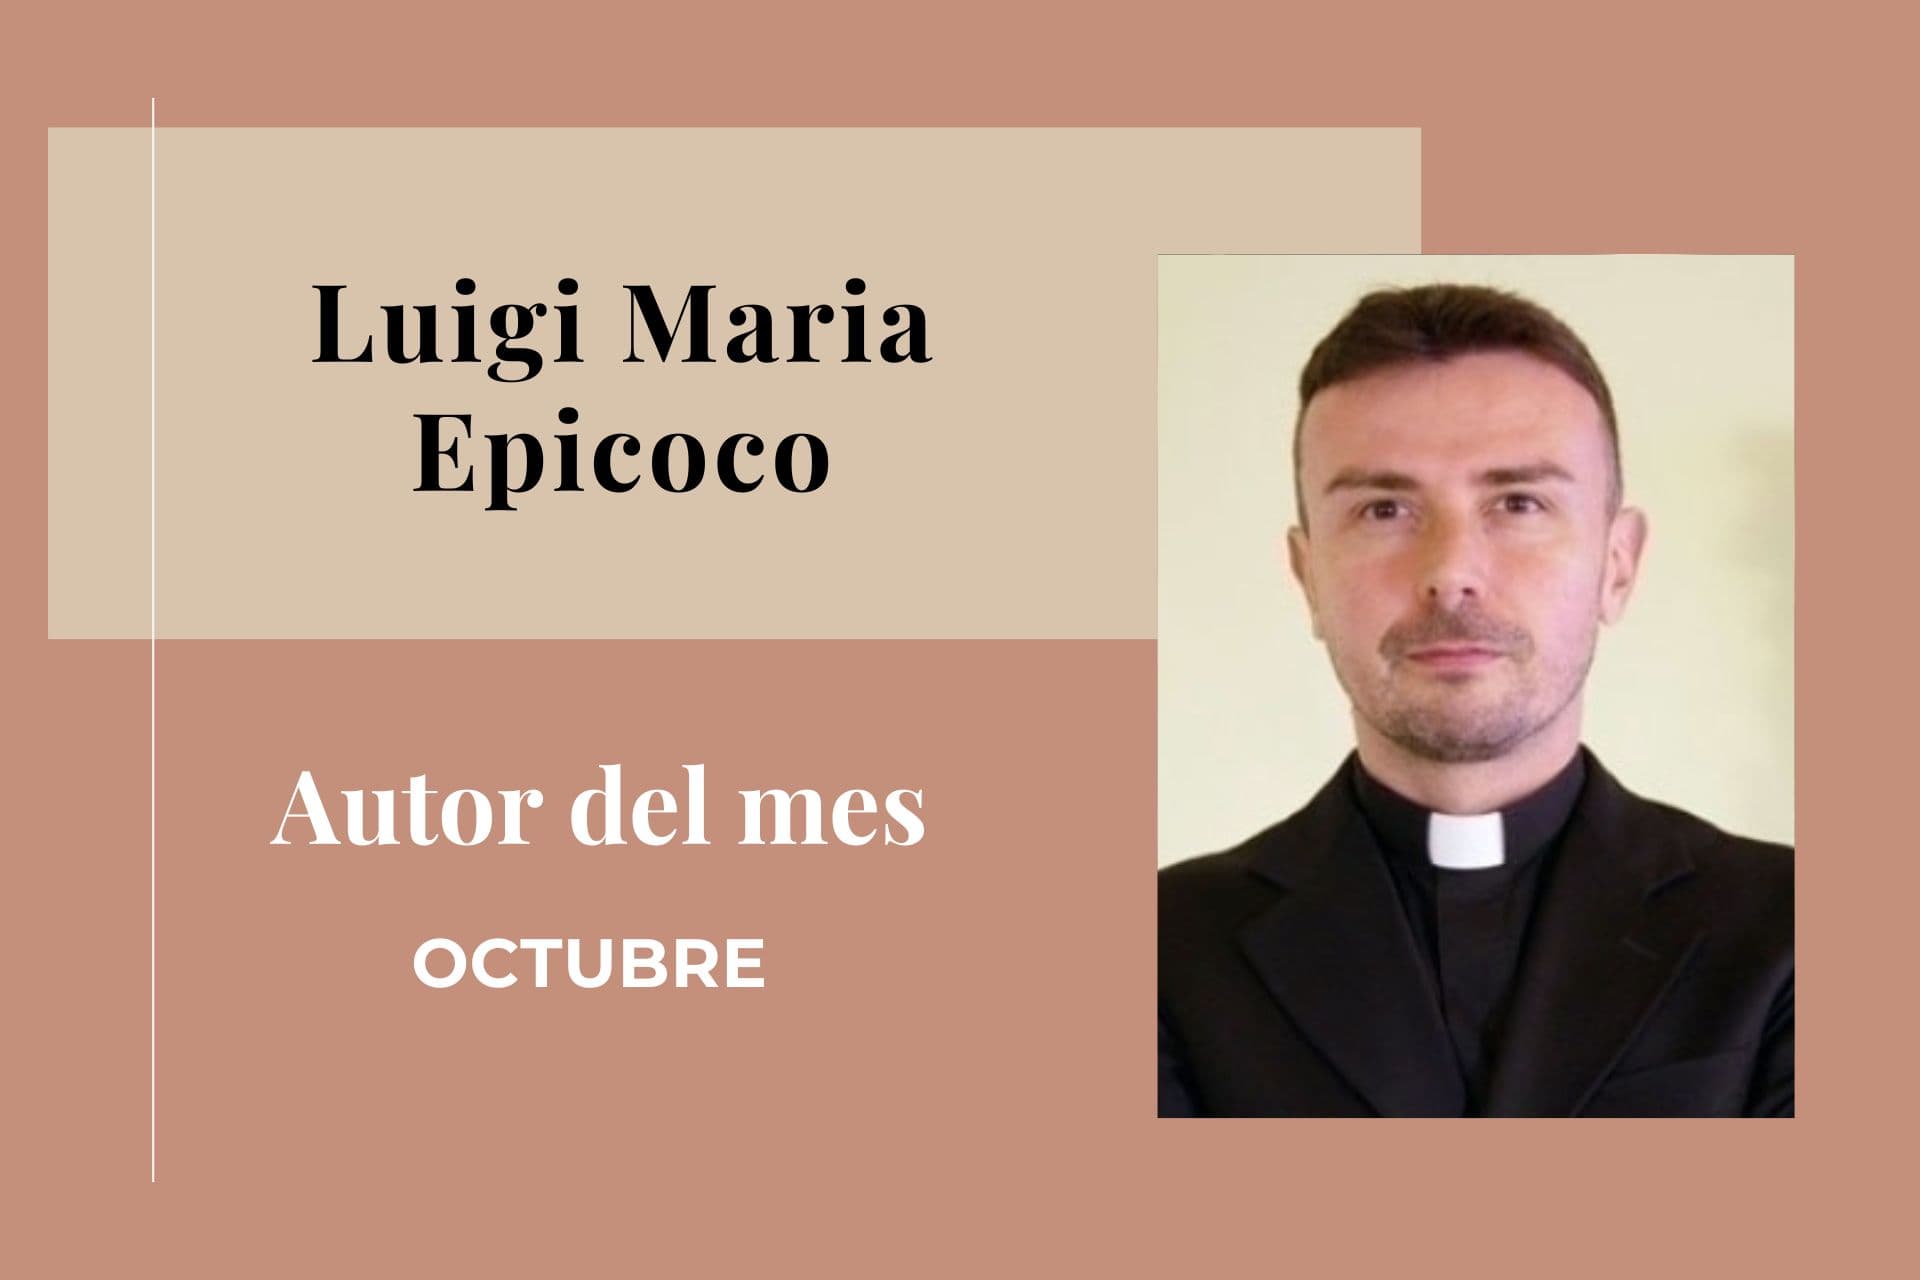 Luigi Maria Epicoco